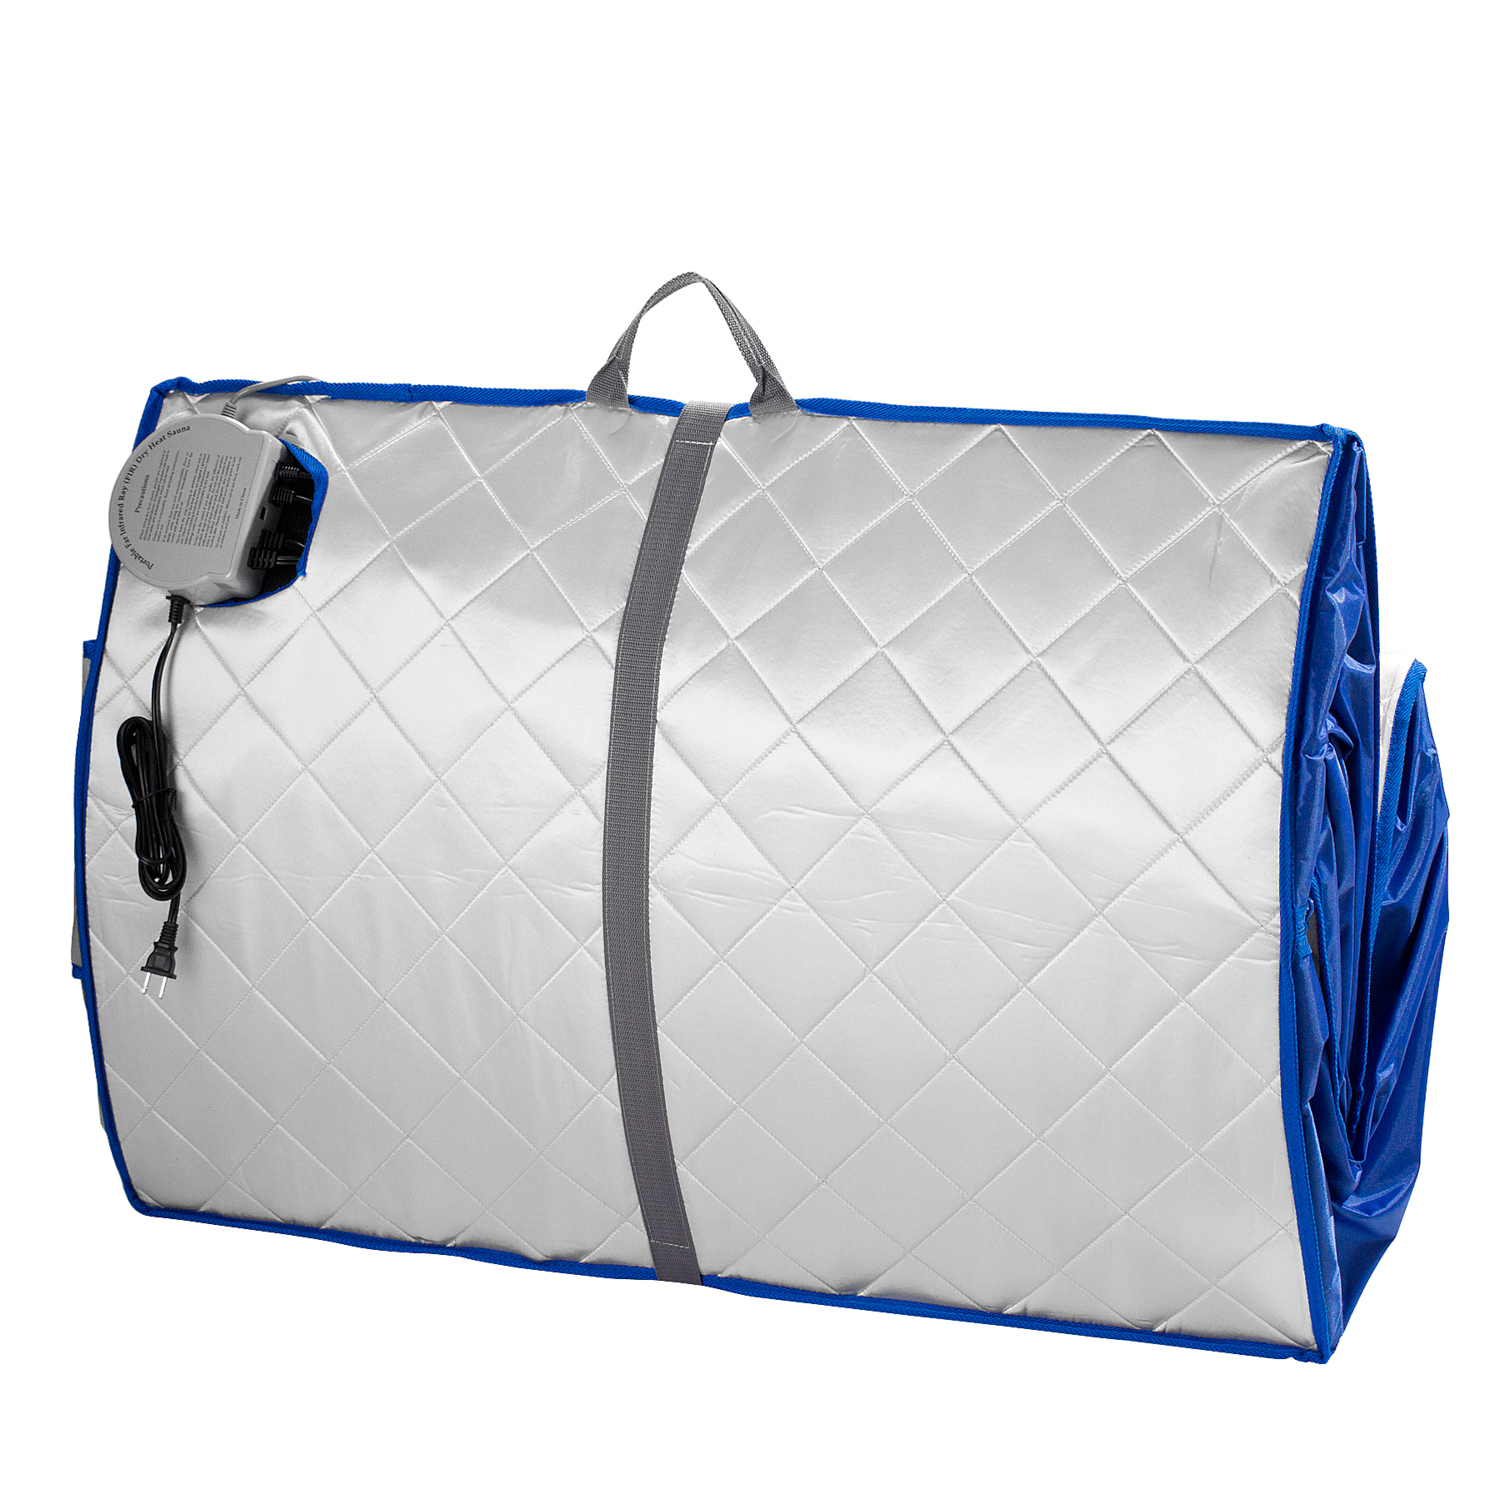 Durasage Portable Infrared Heated Personal Sauna w/ Air Ionizer